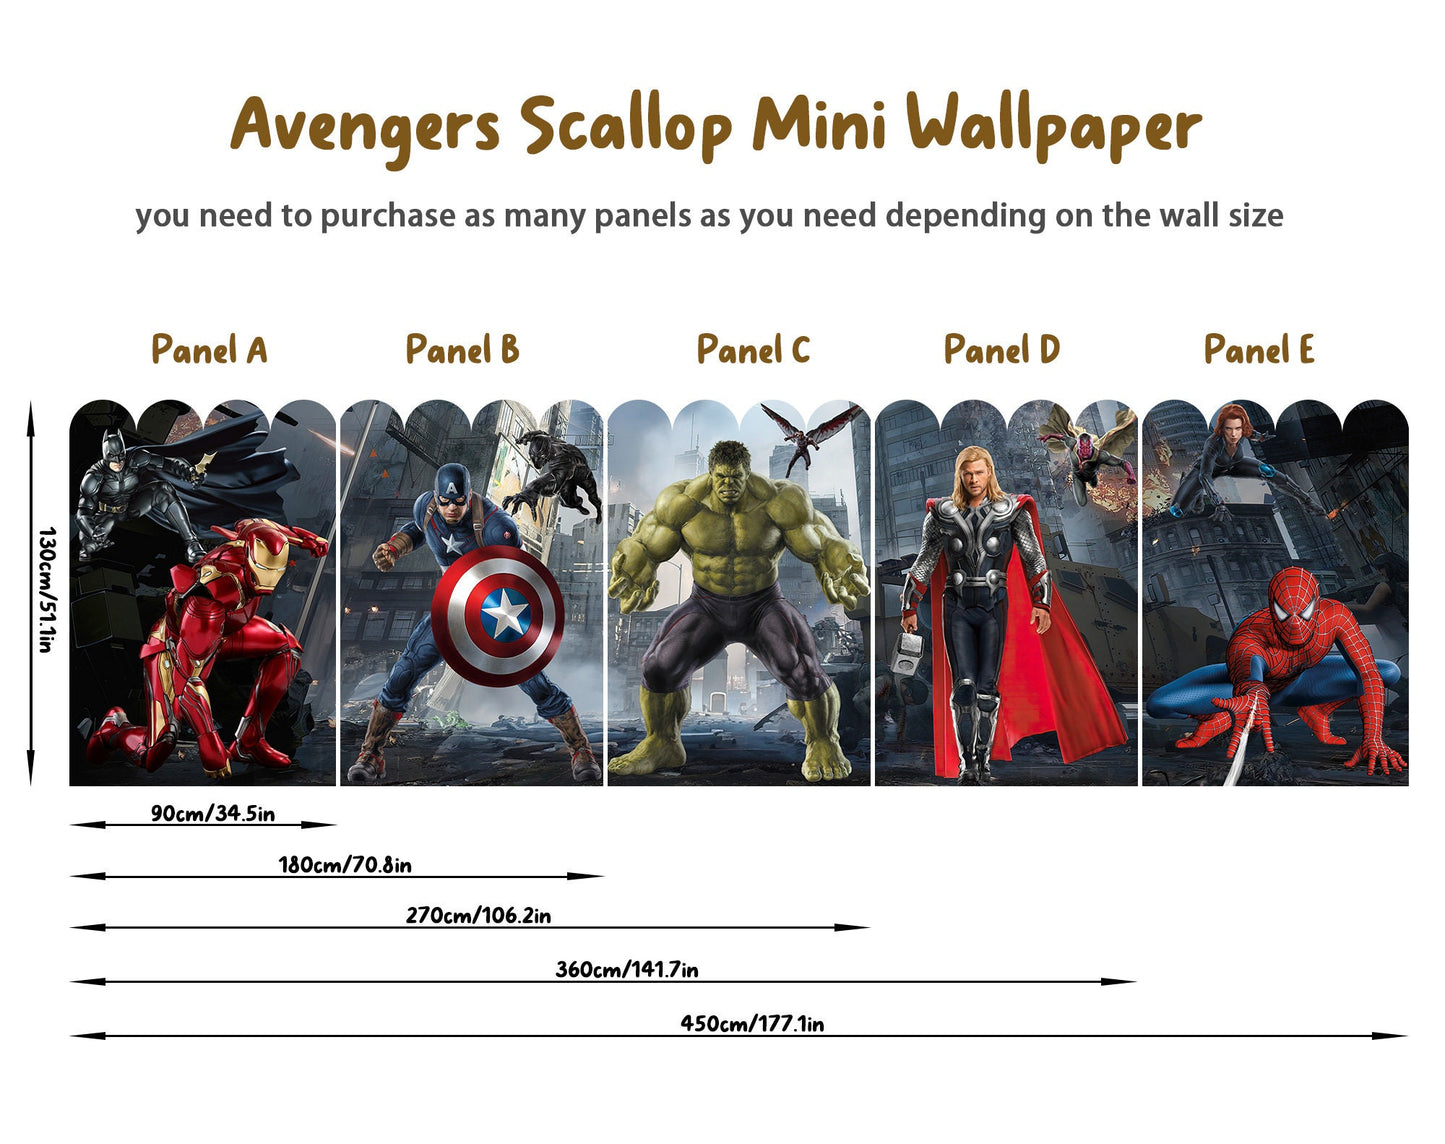 Superhero Alliance Fabric Wall Mural - City Battleground with Iron Man Captain America Batman Hulk Spider-Man - BR459